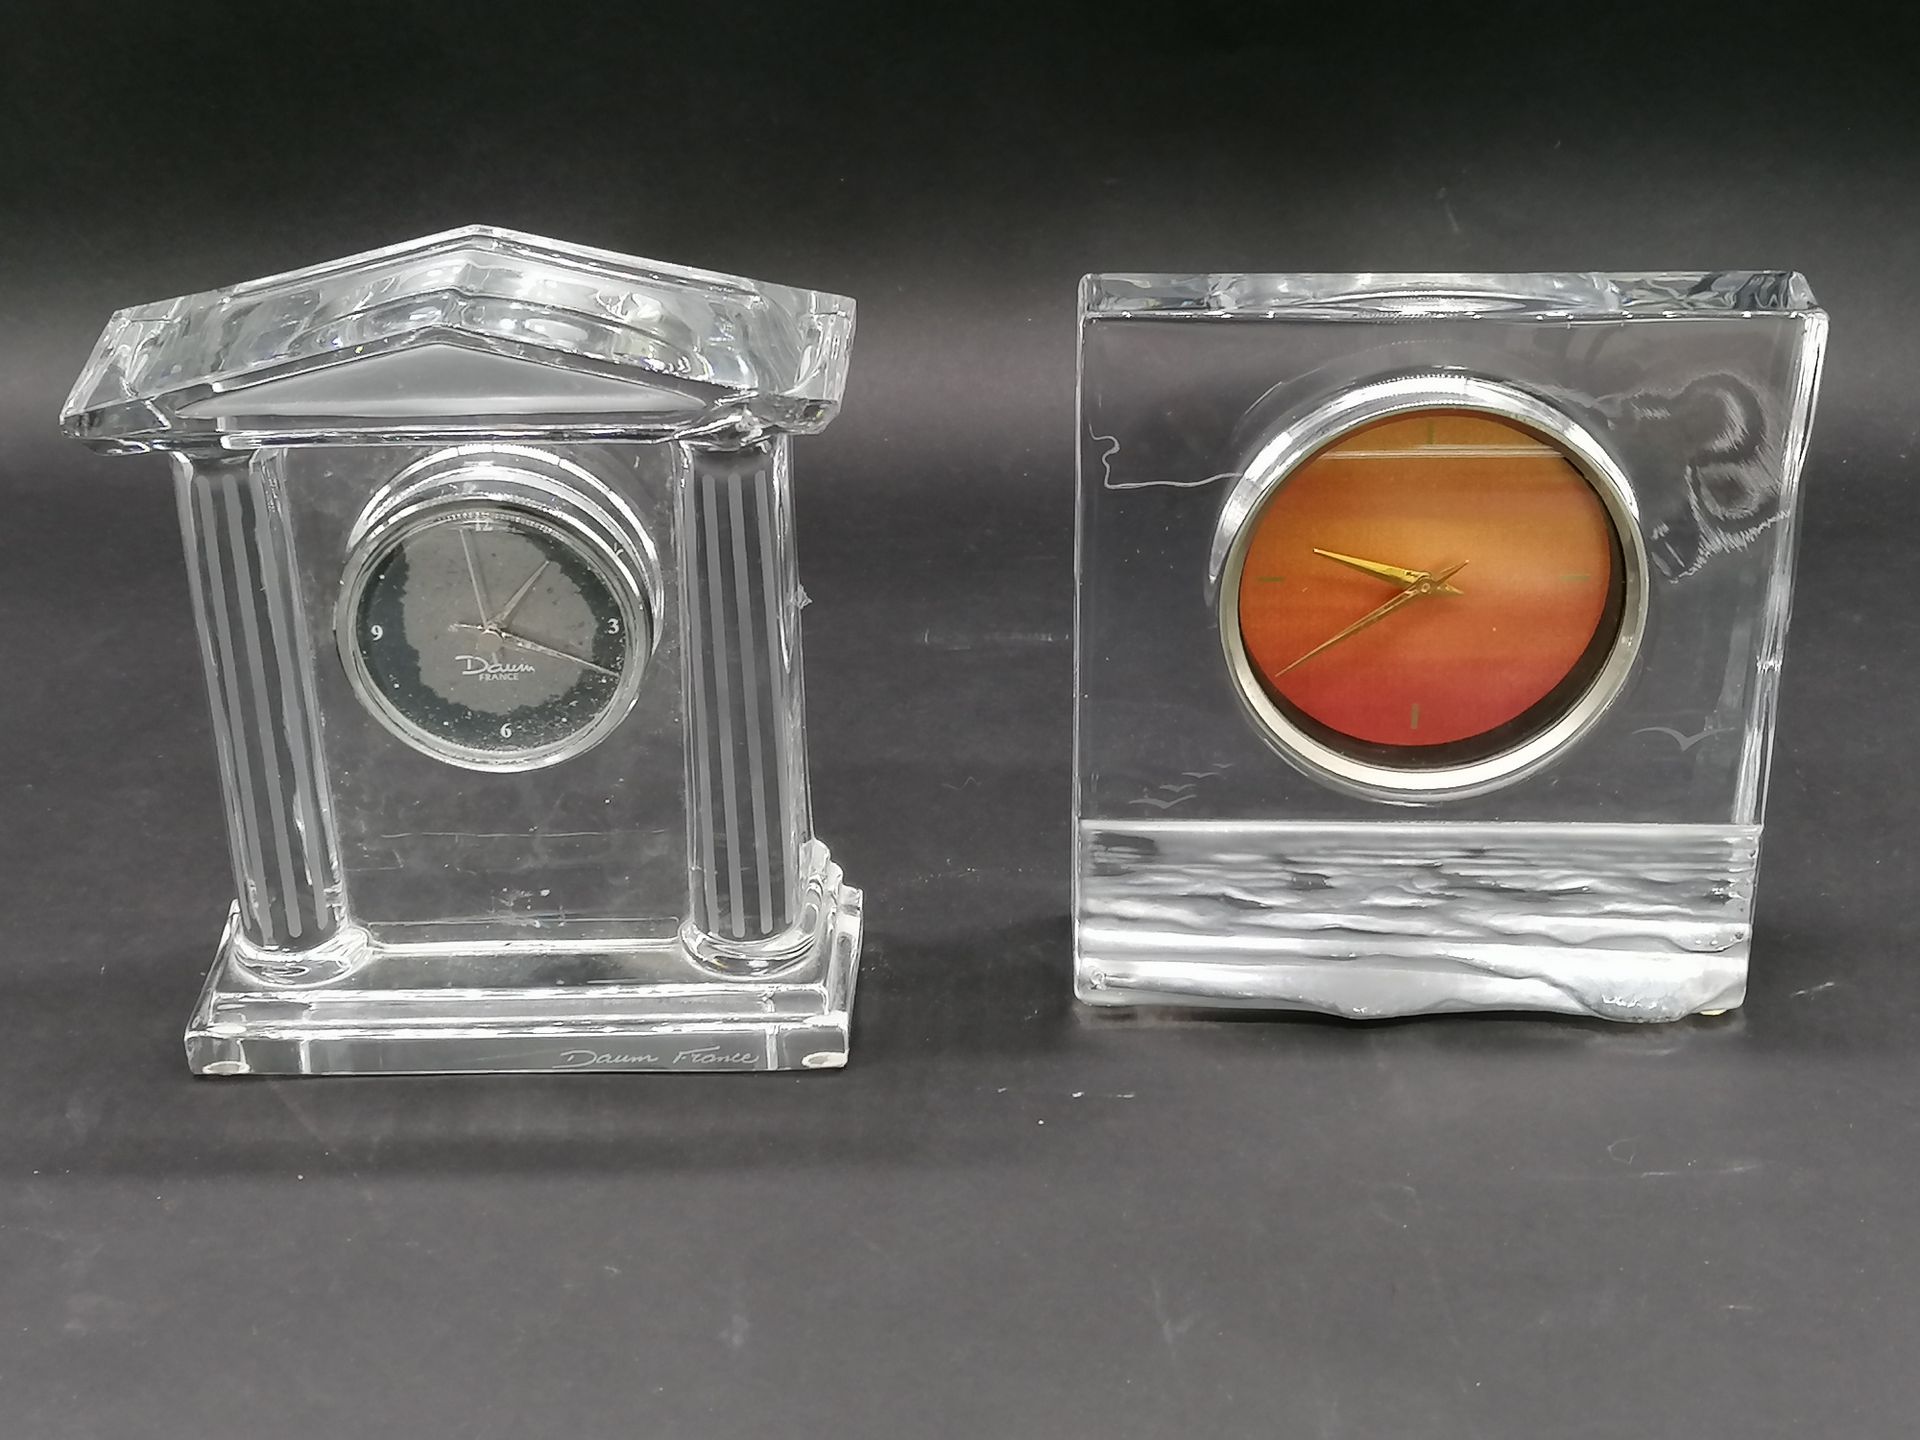 Null DAUM

一套两个水晶台钟

H.19和18厘米